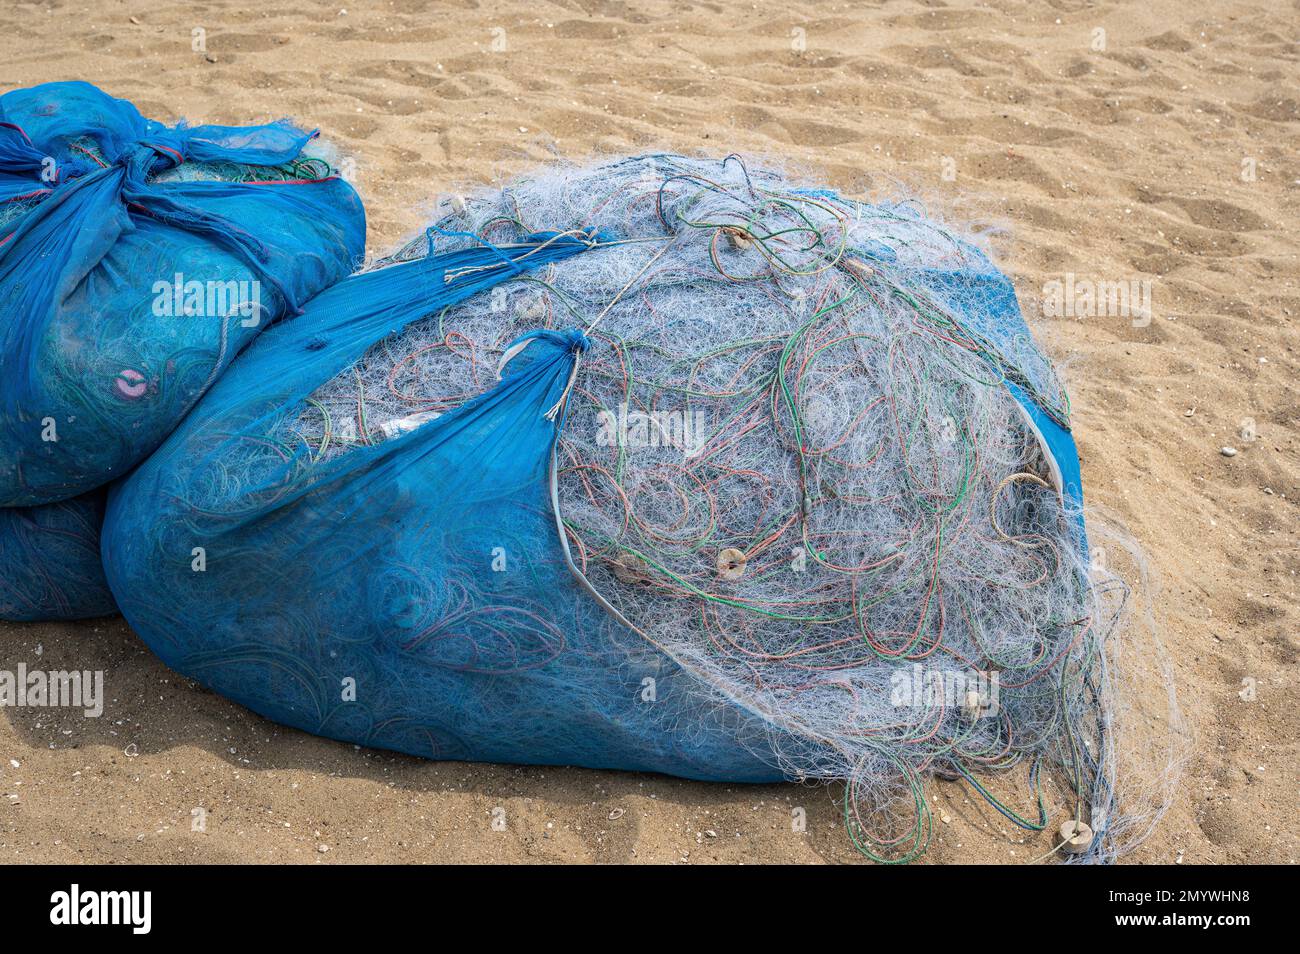 https://c8.alamy.com/comp/2MYWHN8/fishing-nets-collected-on-sand-beach-big-bale-of-fishing-nets-fishing-nets-on-the-beach-2MYWHN8.jpg